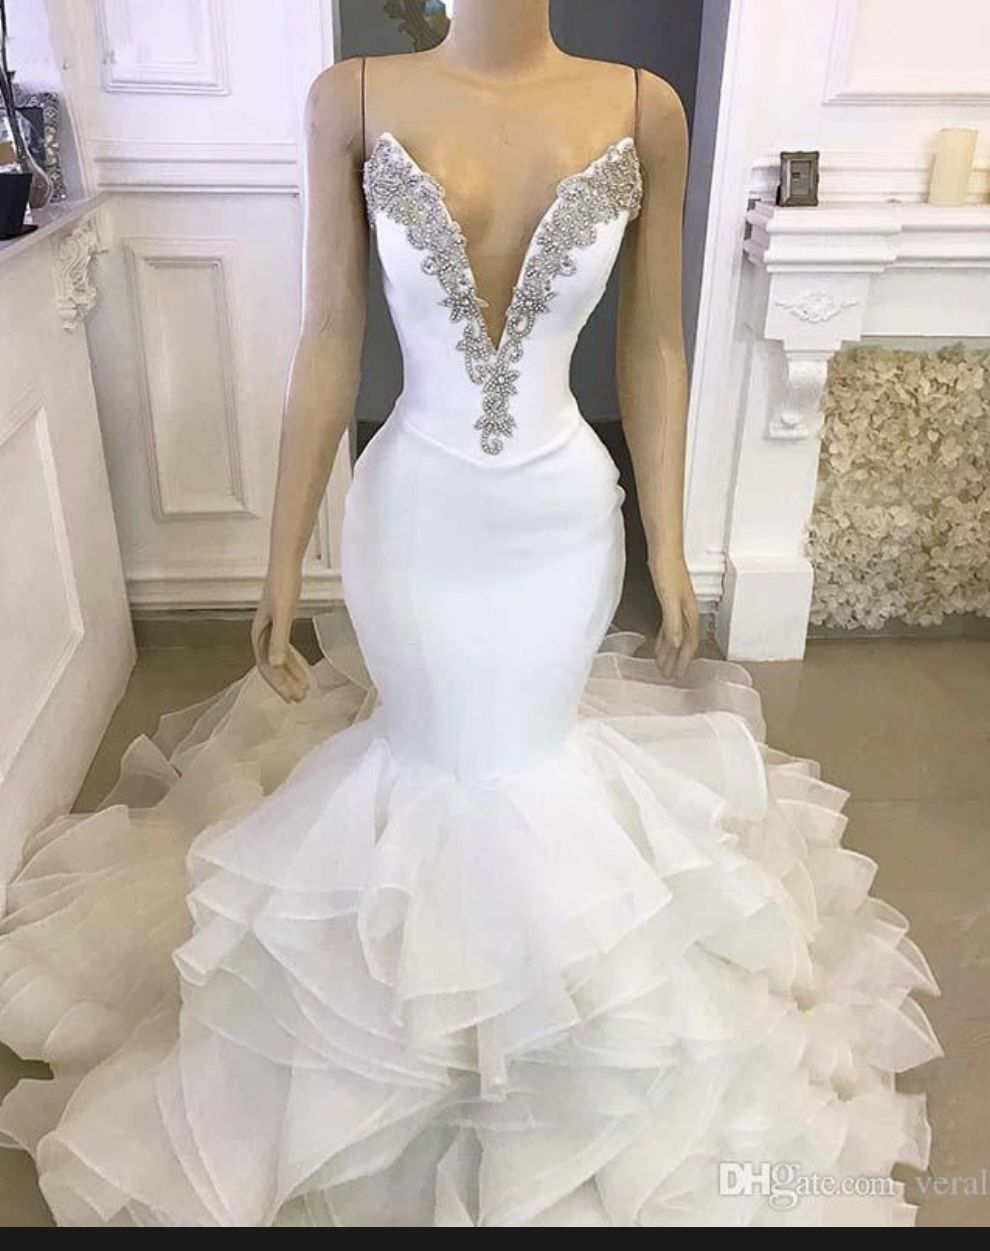 Stunning White Fitted Mermaid Wedding Dress